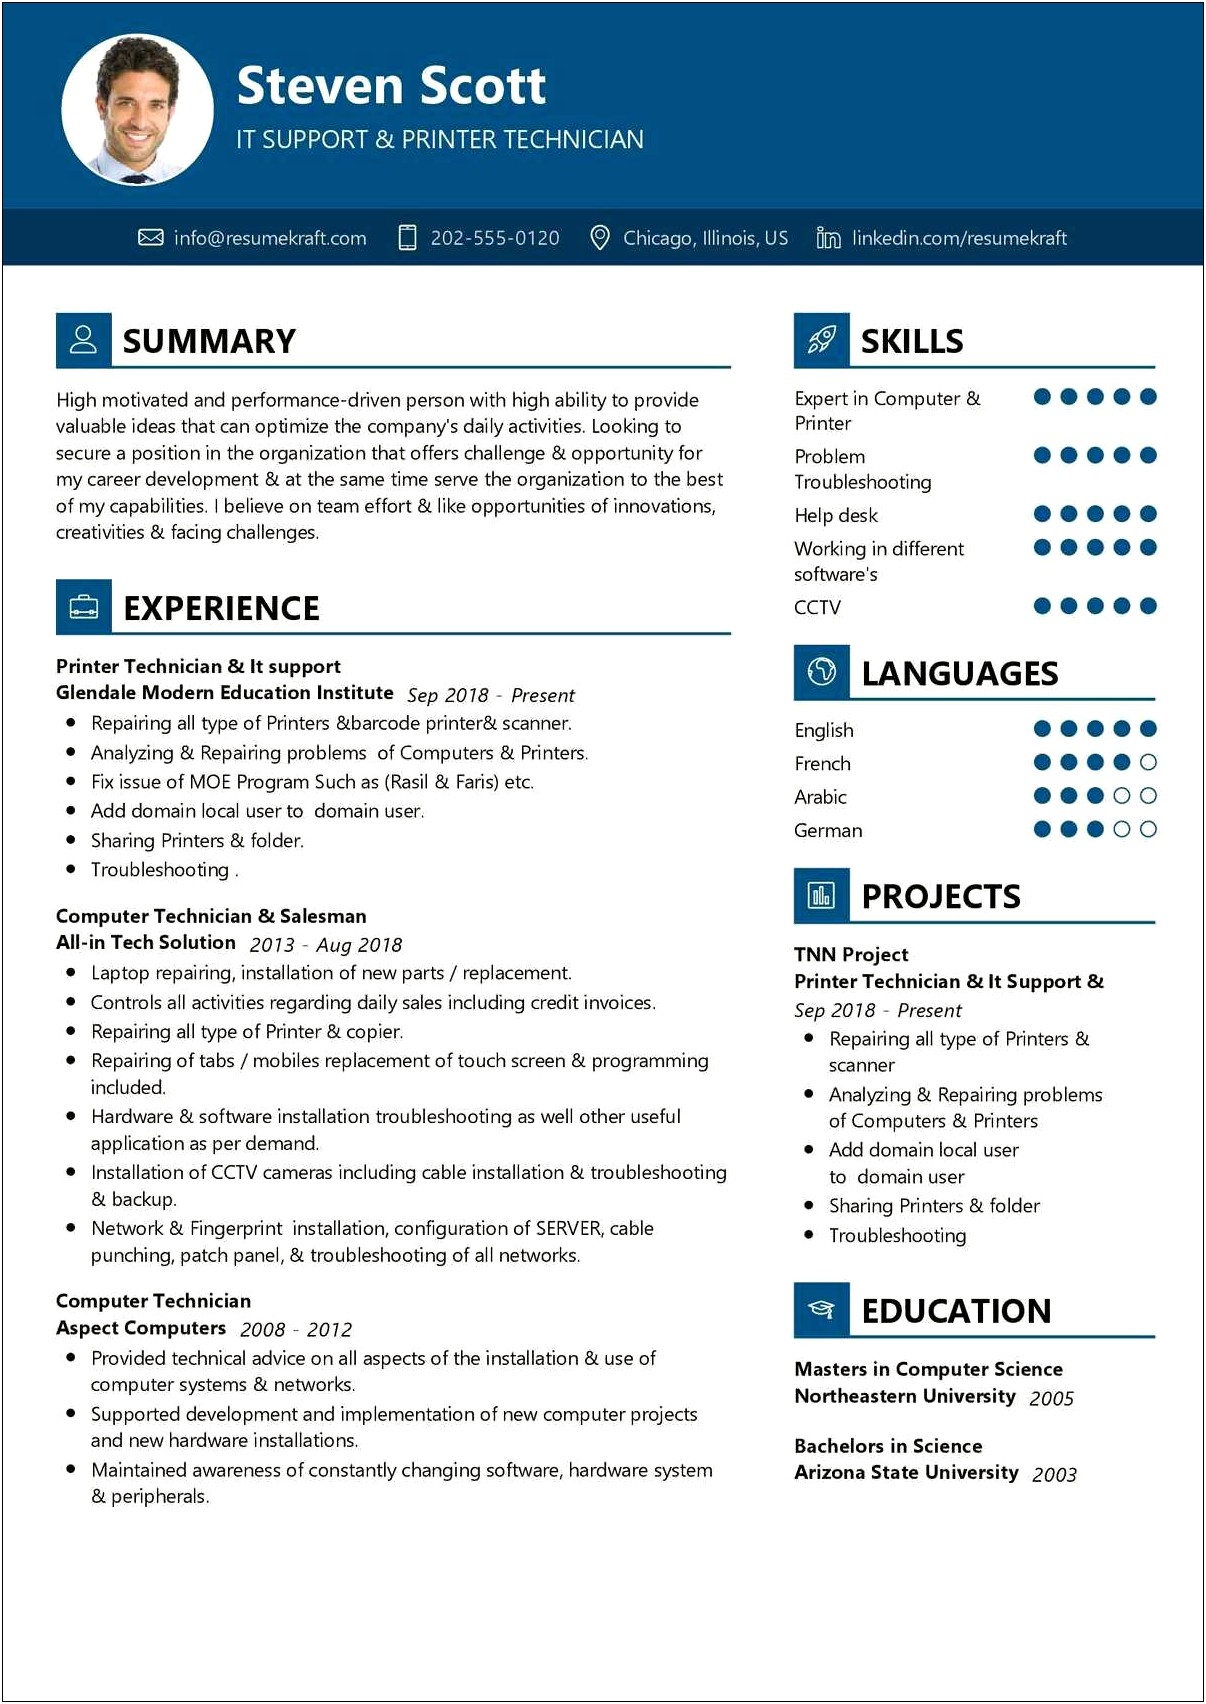 A+ Professional Summary Resume Sample